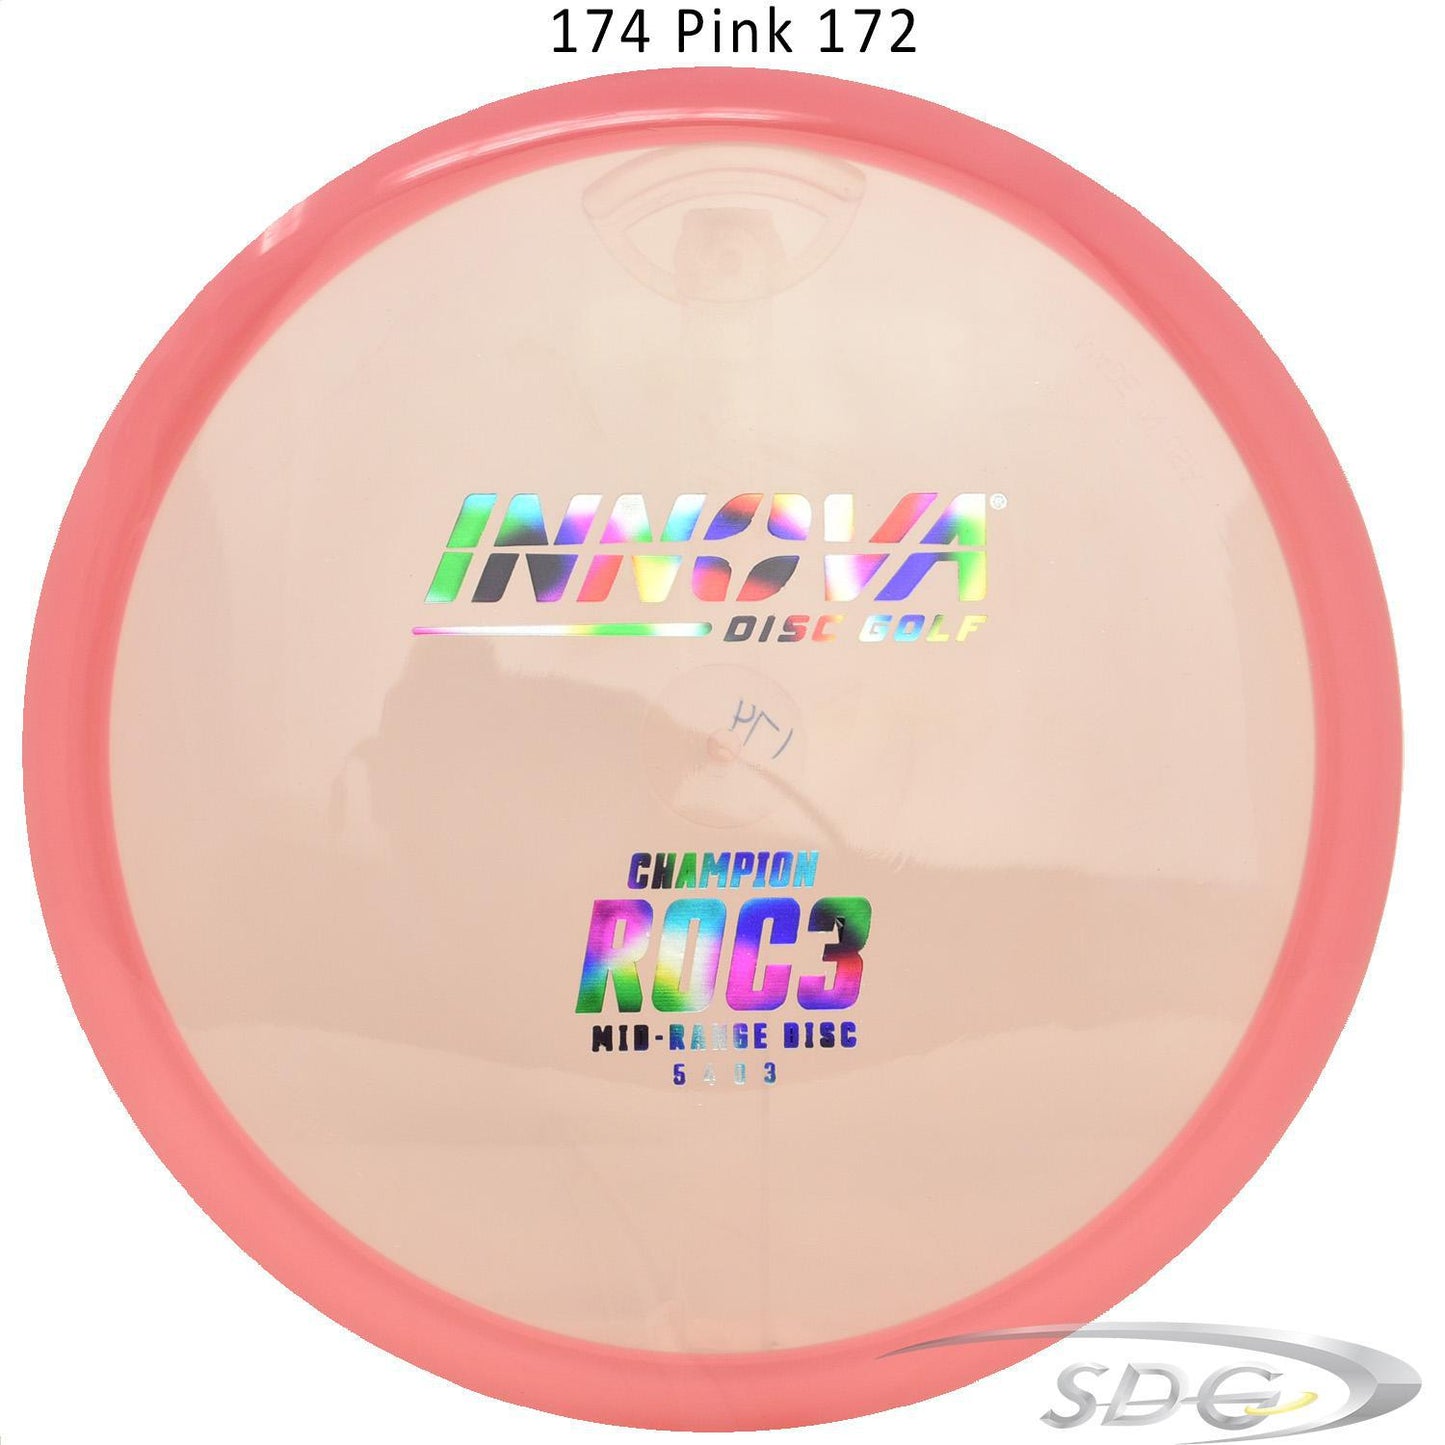 innova-champion-roc3-disc-golf-mid-range 174 Pink 172 